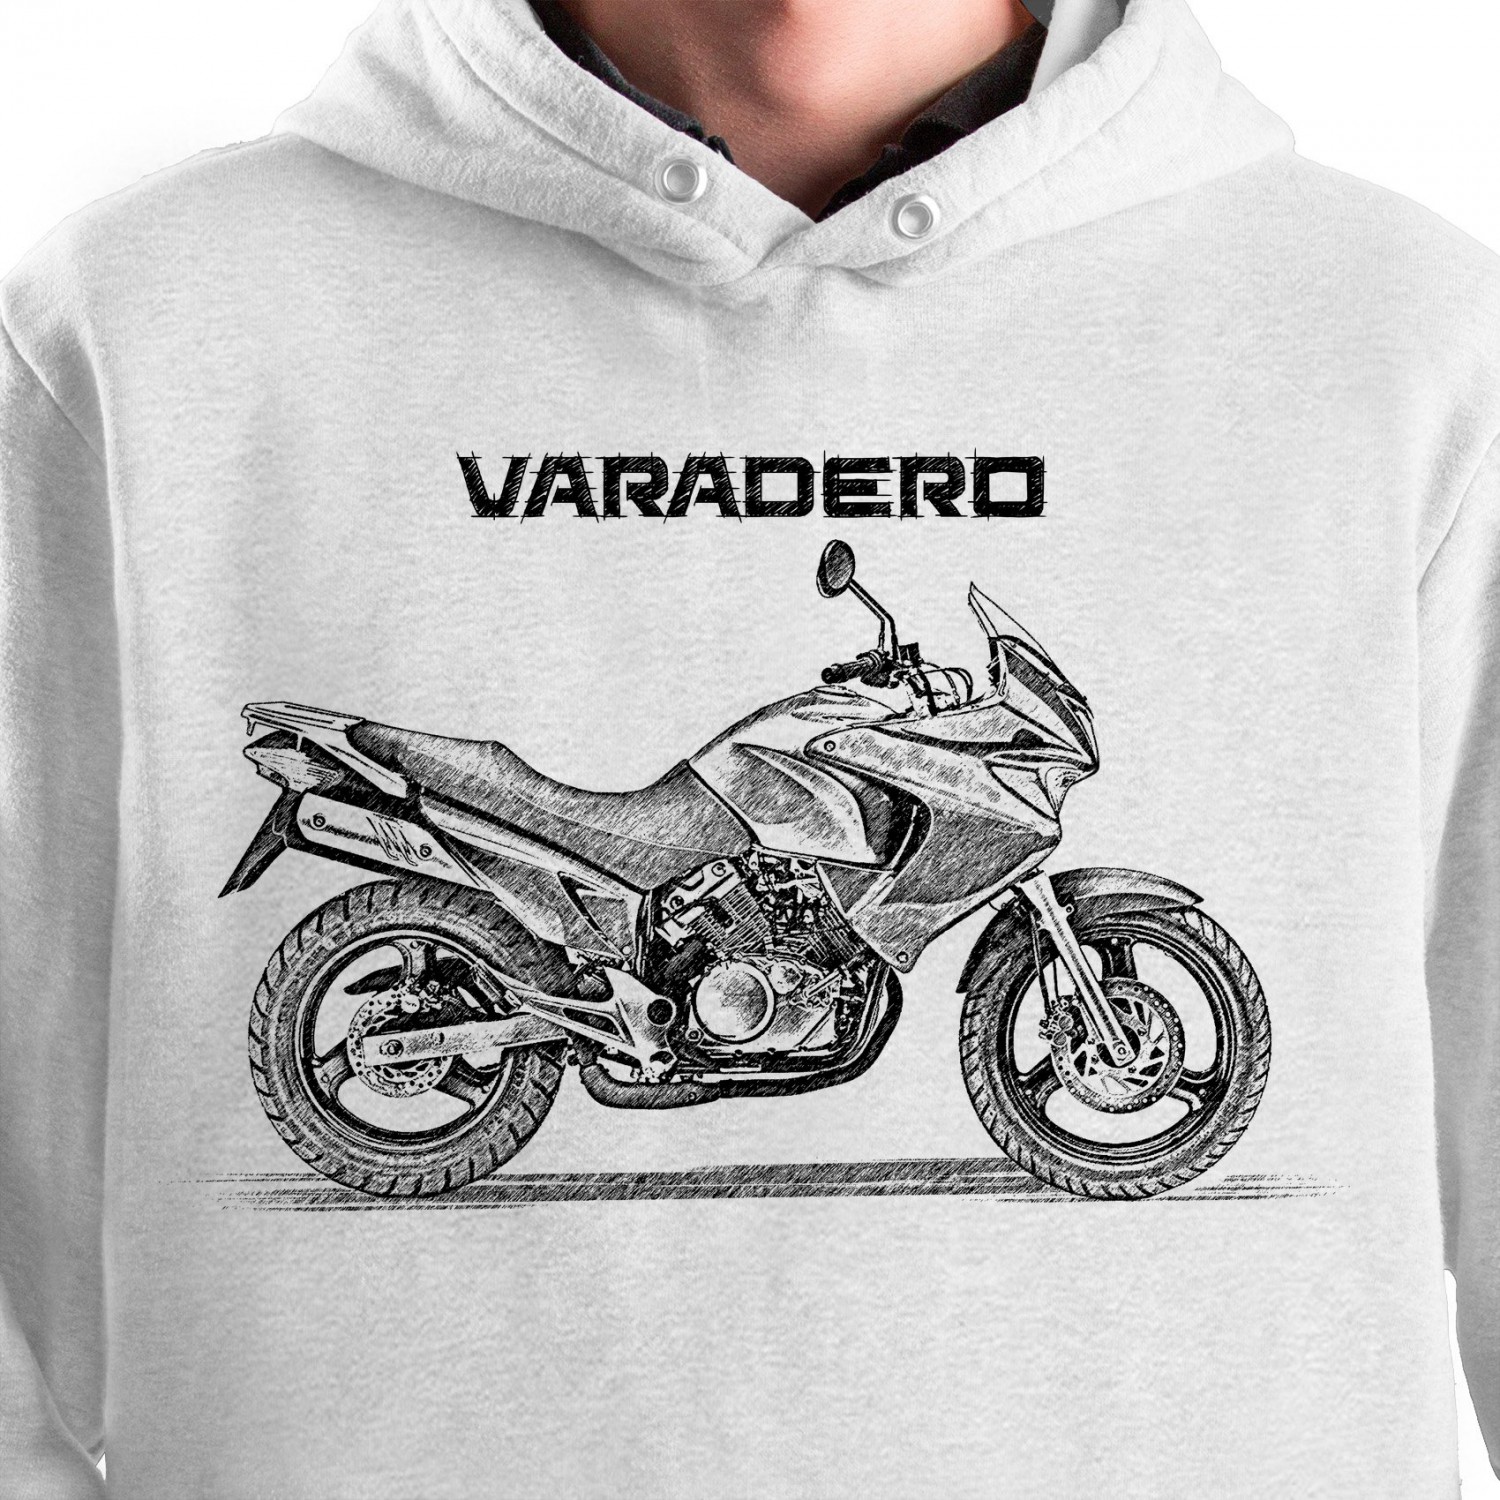 White T-shirt with Honda Varadero 125. Gift for motorcyclist.